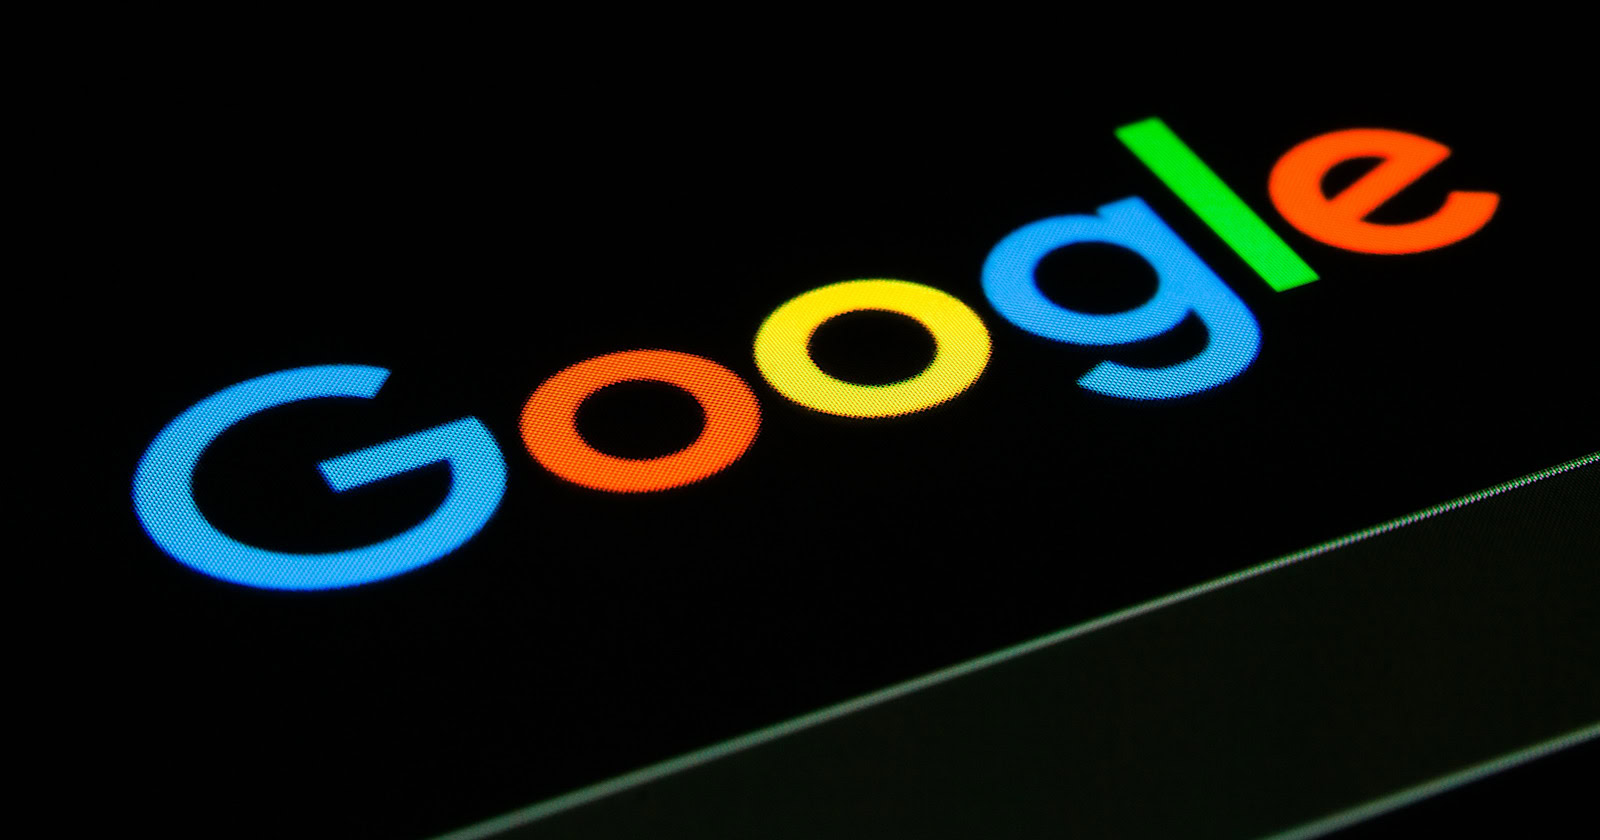 Google Launches June 2024 Spam Update